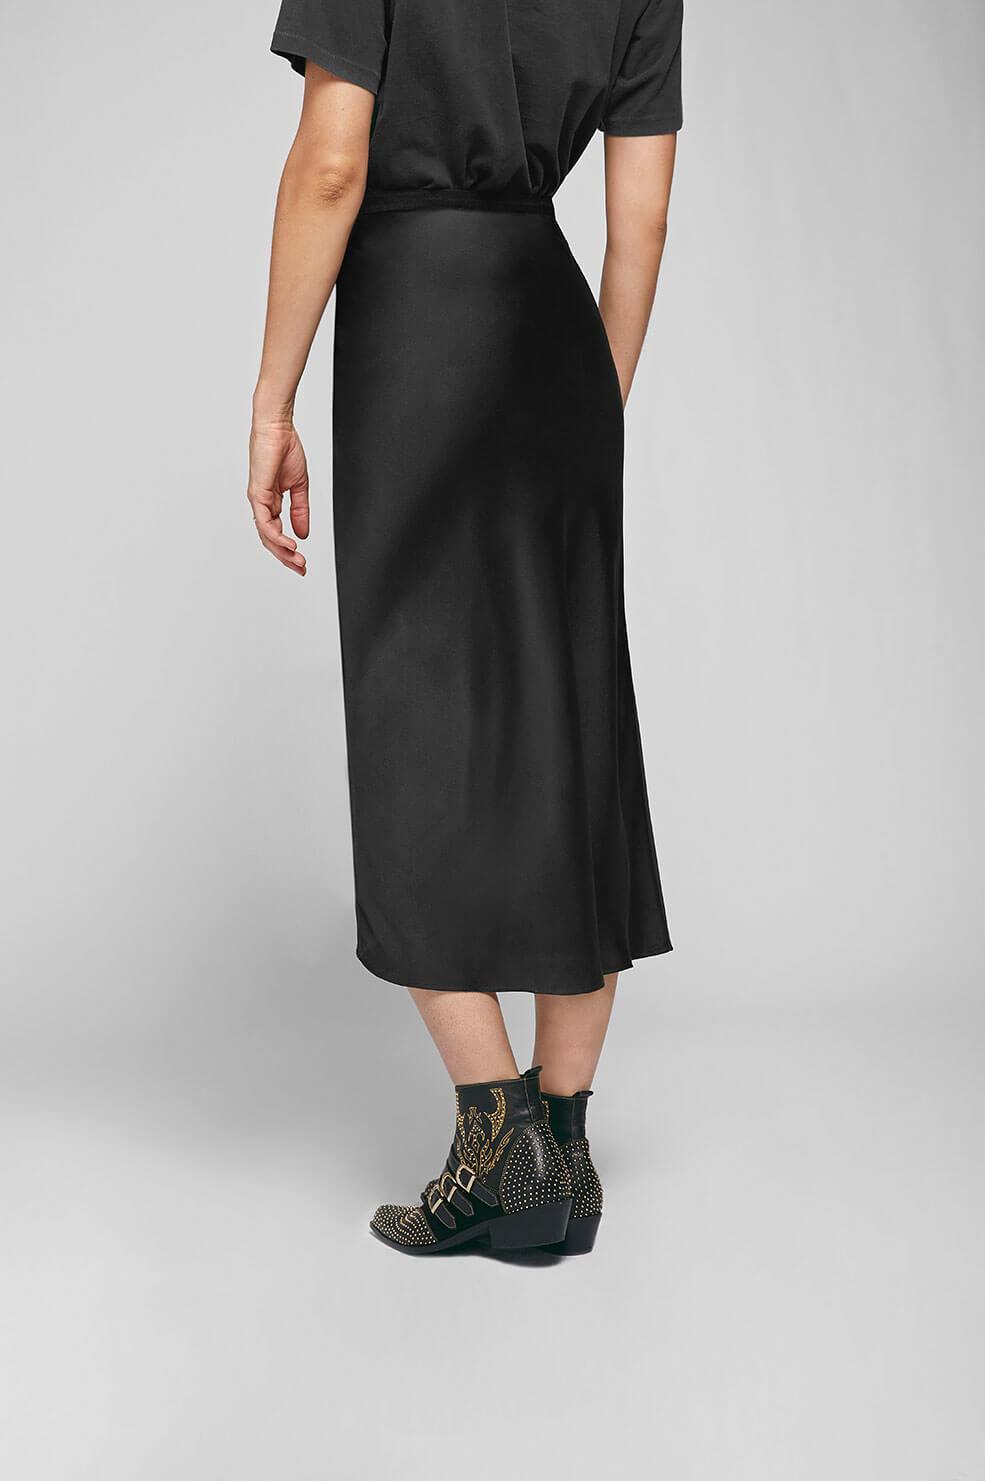 Anine Bing Bar Silk Skirt in Black - Lyst